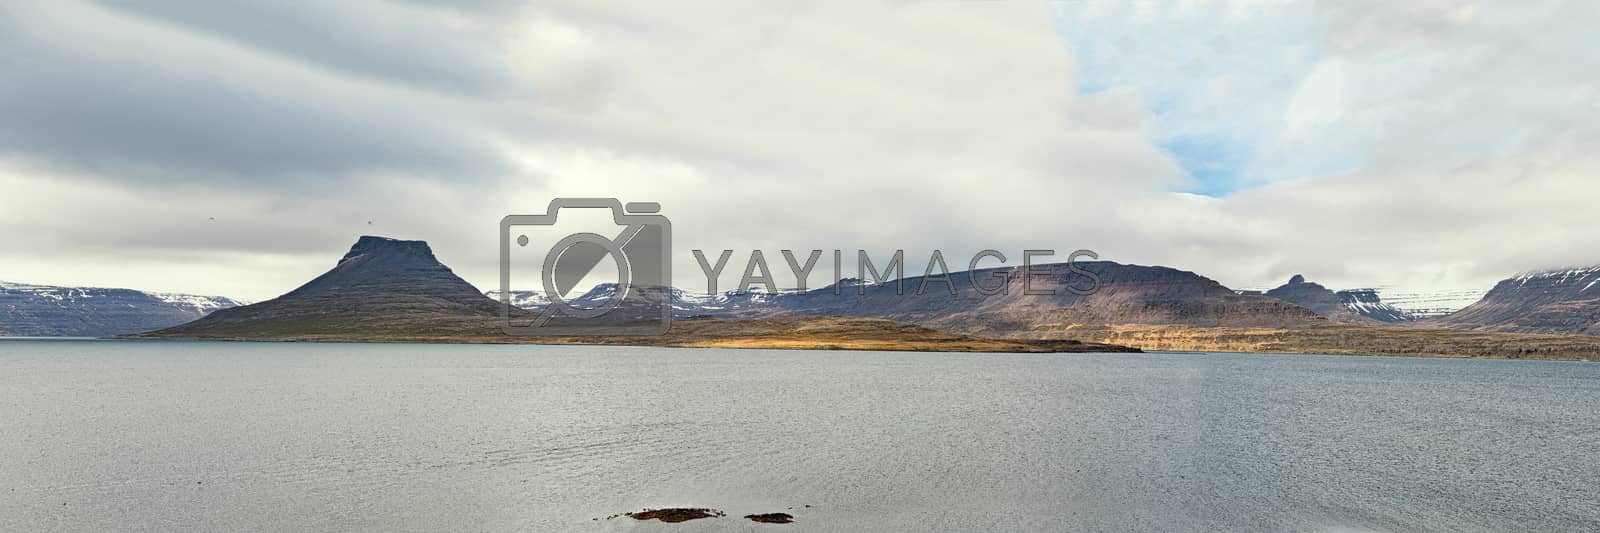 Royalty free image of Mountains of Iceland by LuigiMorbidelli